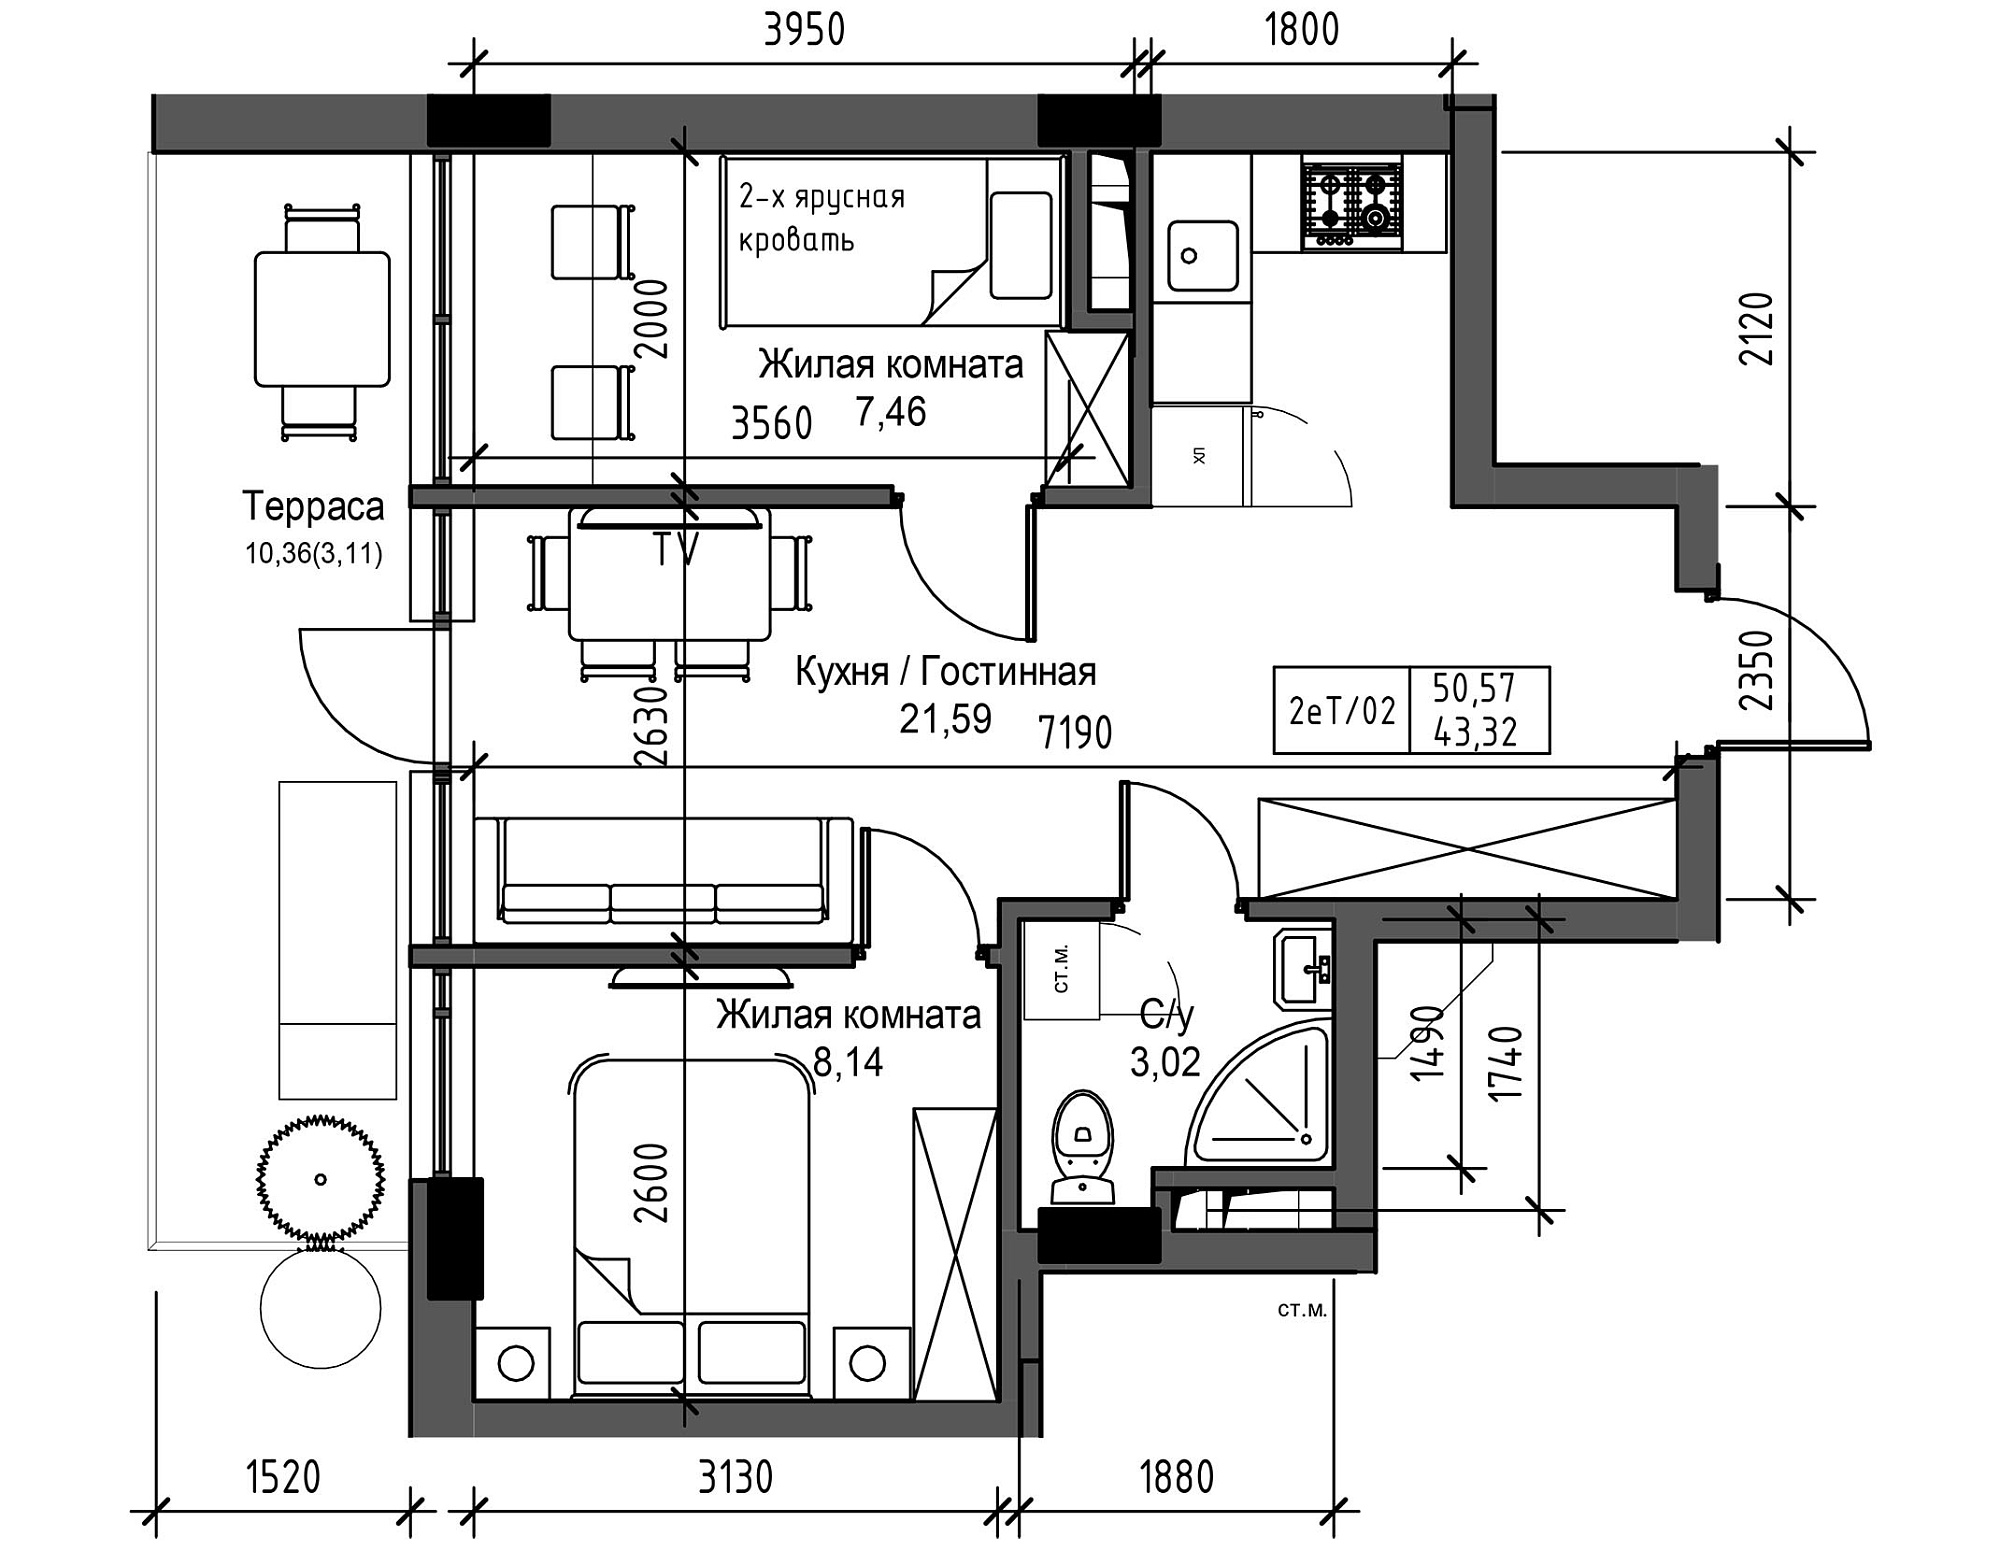 Планування 2-к квартира площею 43.32м2, UM-003-03/0009.